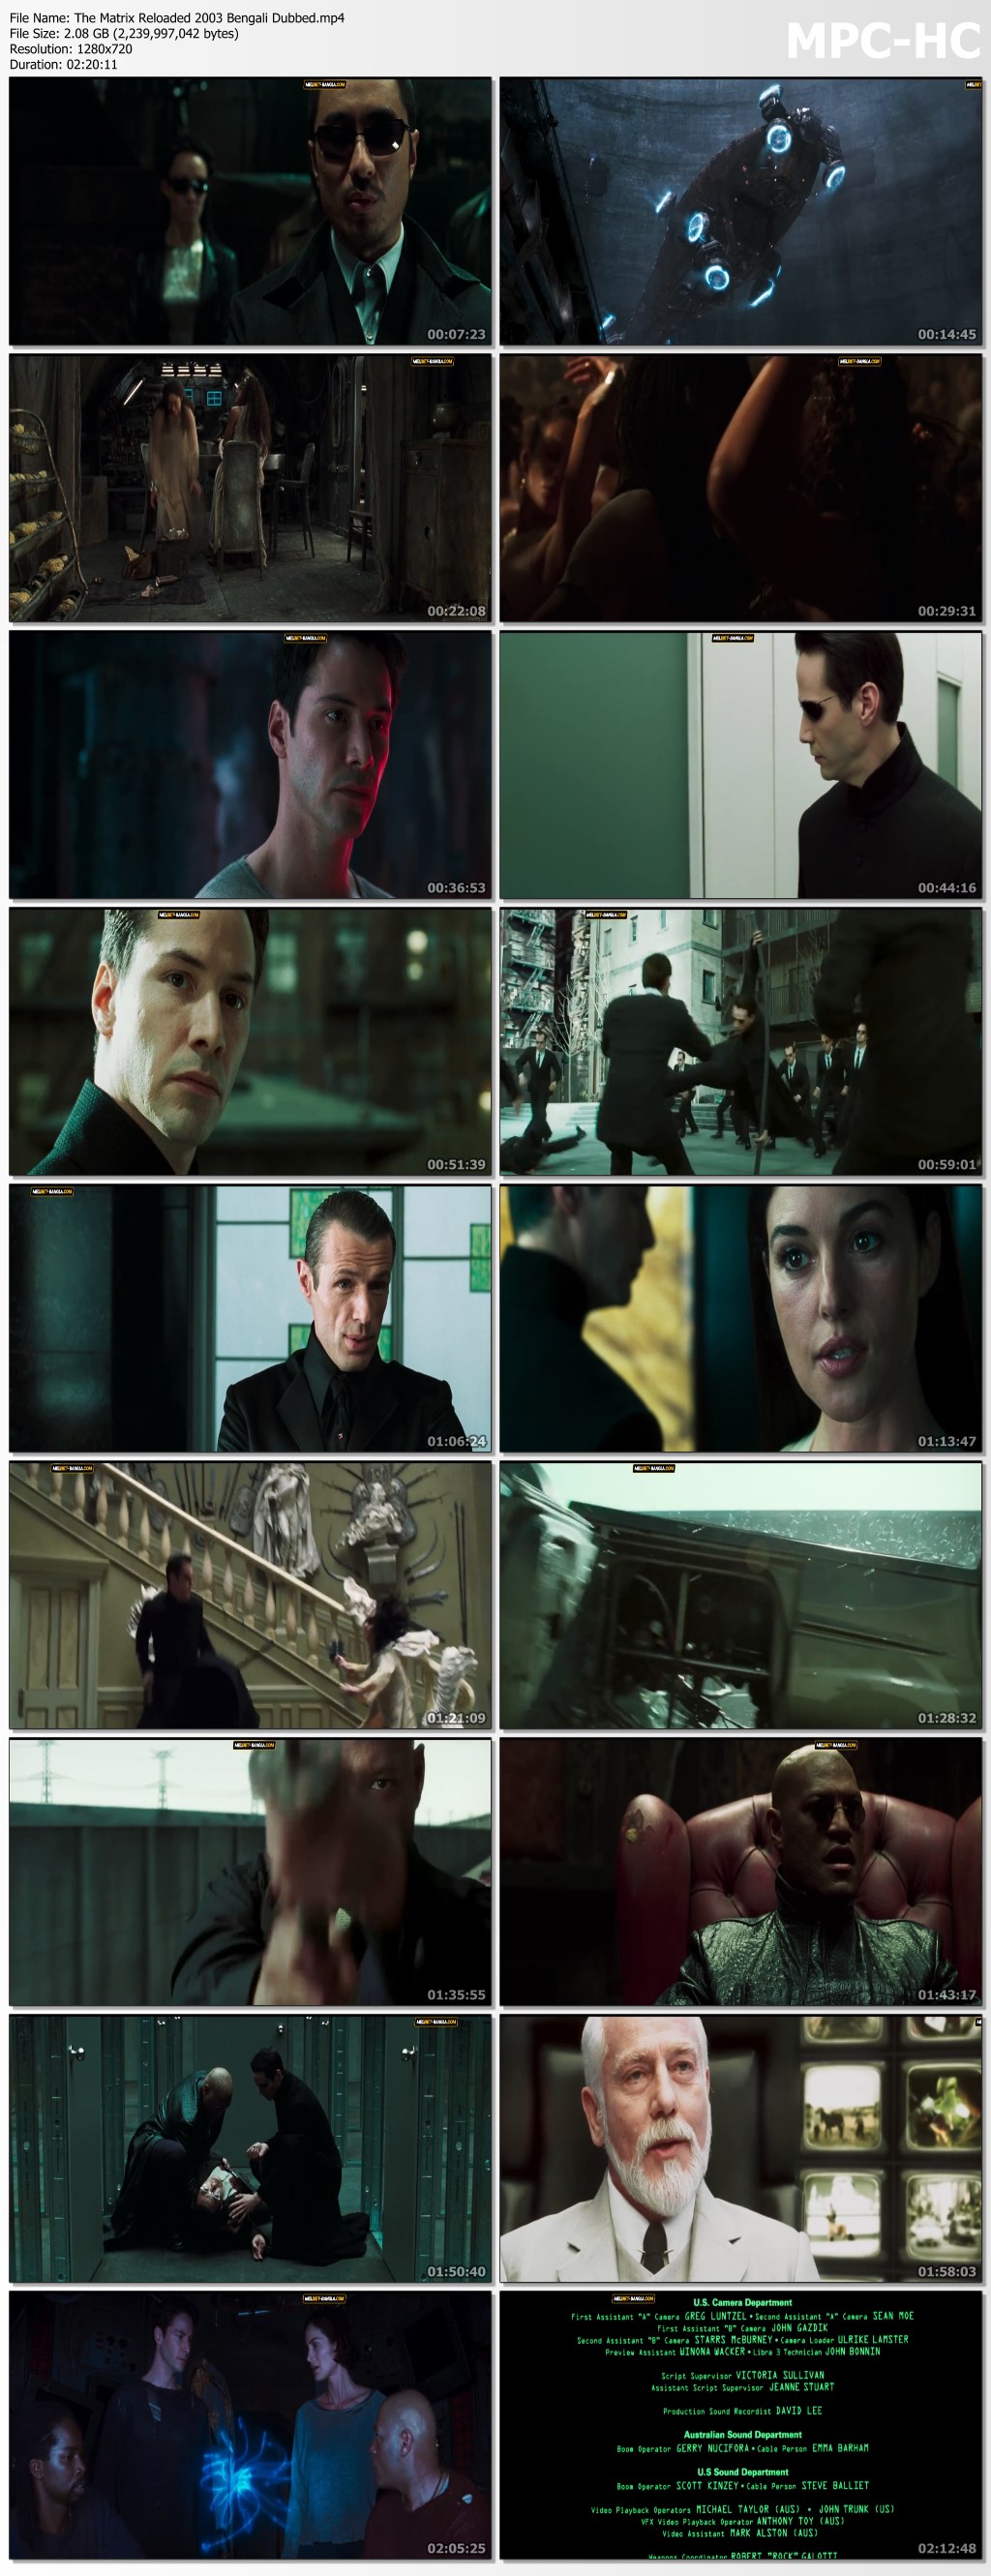 The-Matrix-Reloaded-2003-Bengali-Dubbed.mp4_thumbs.jpg